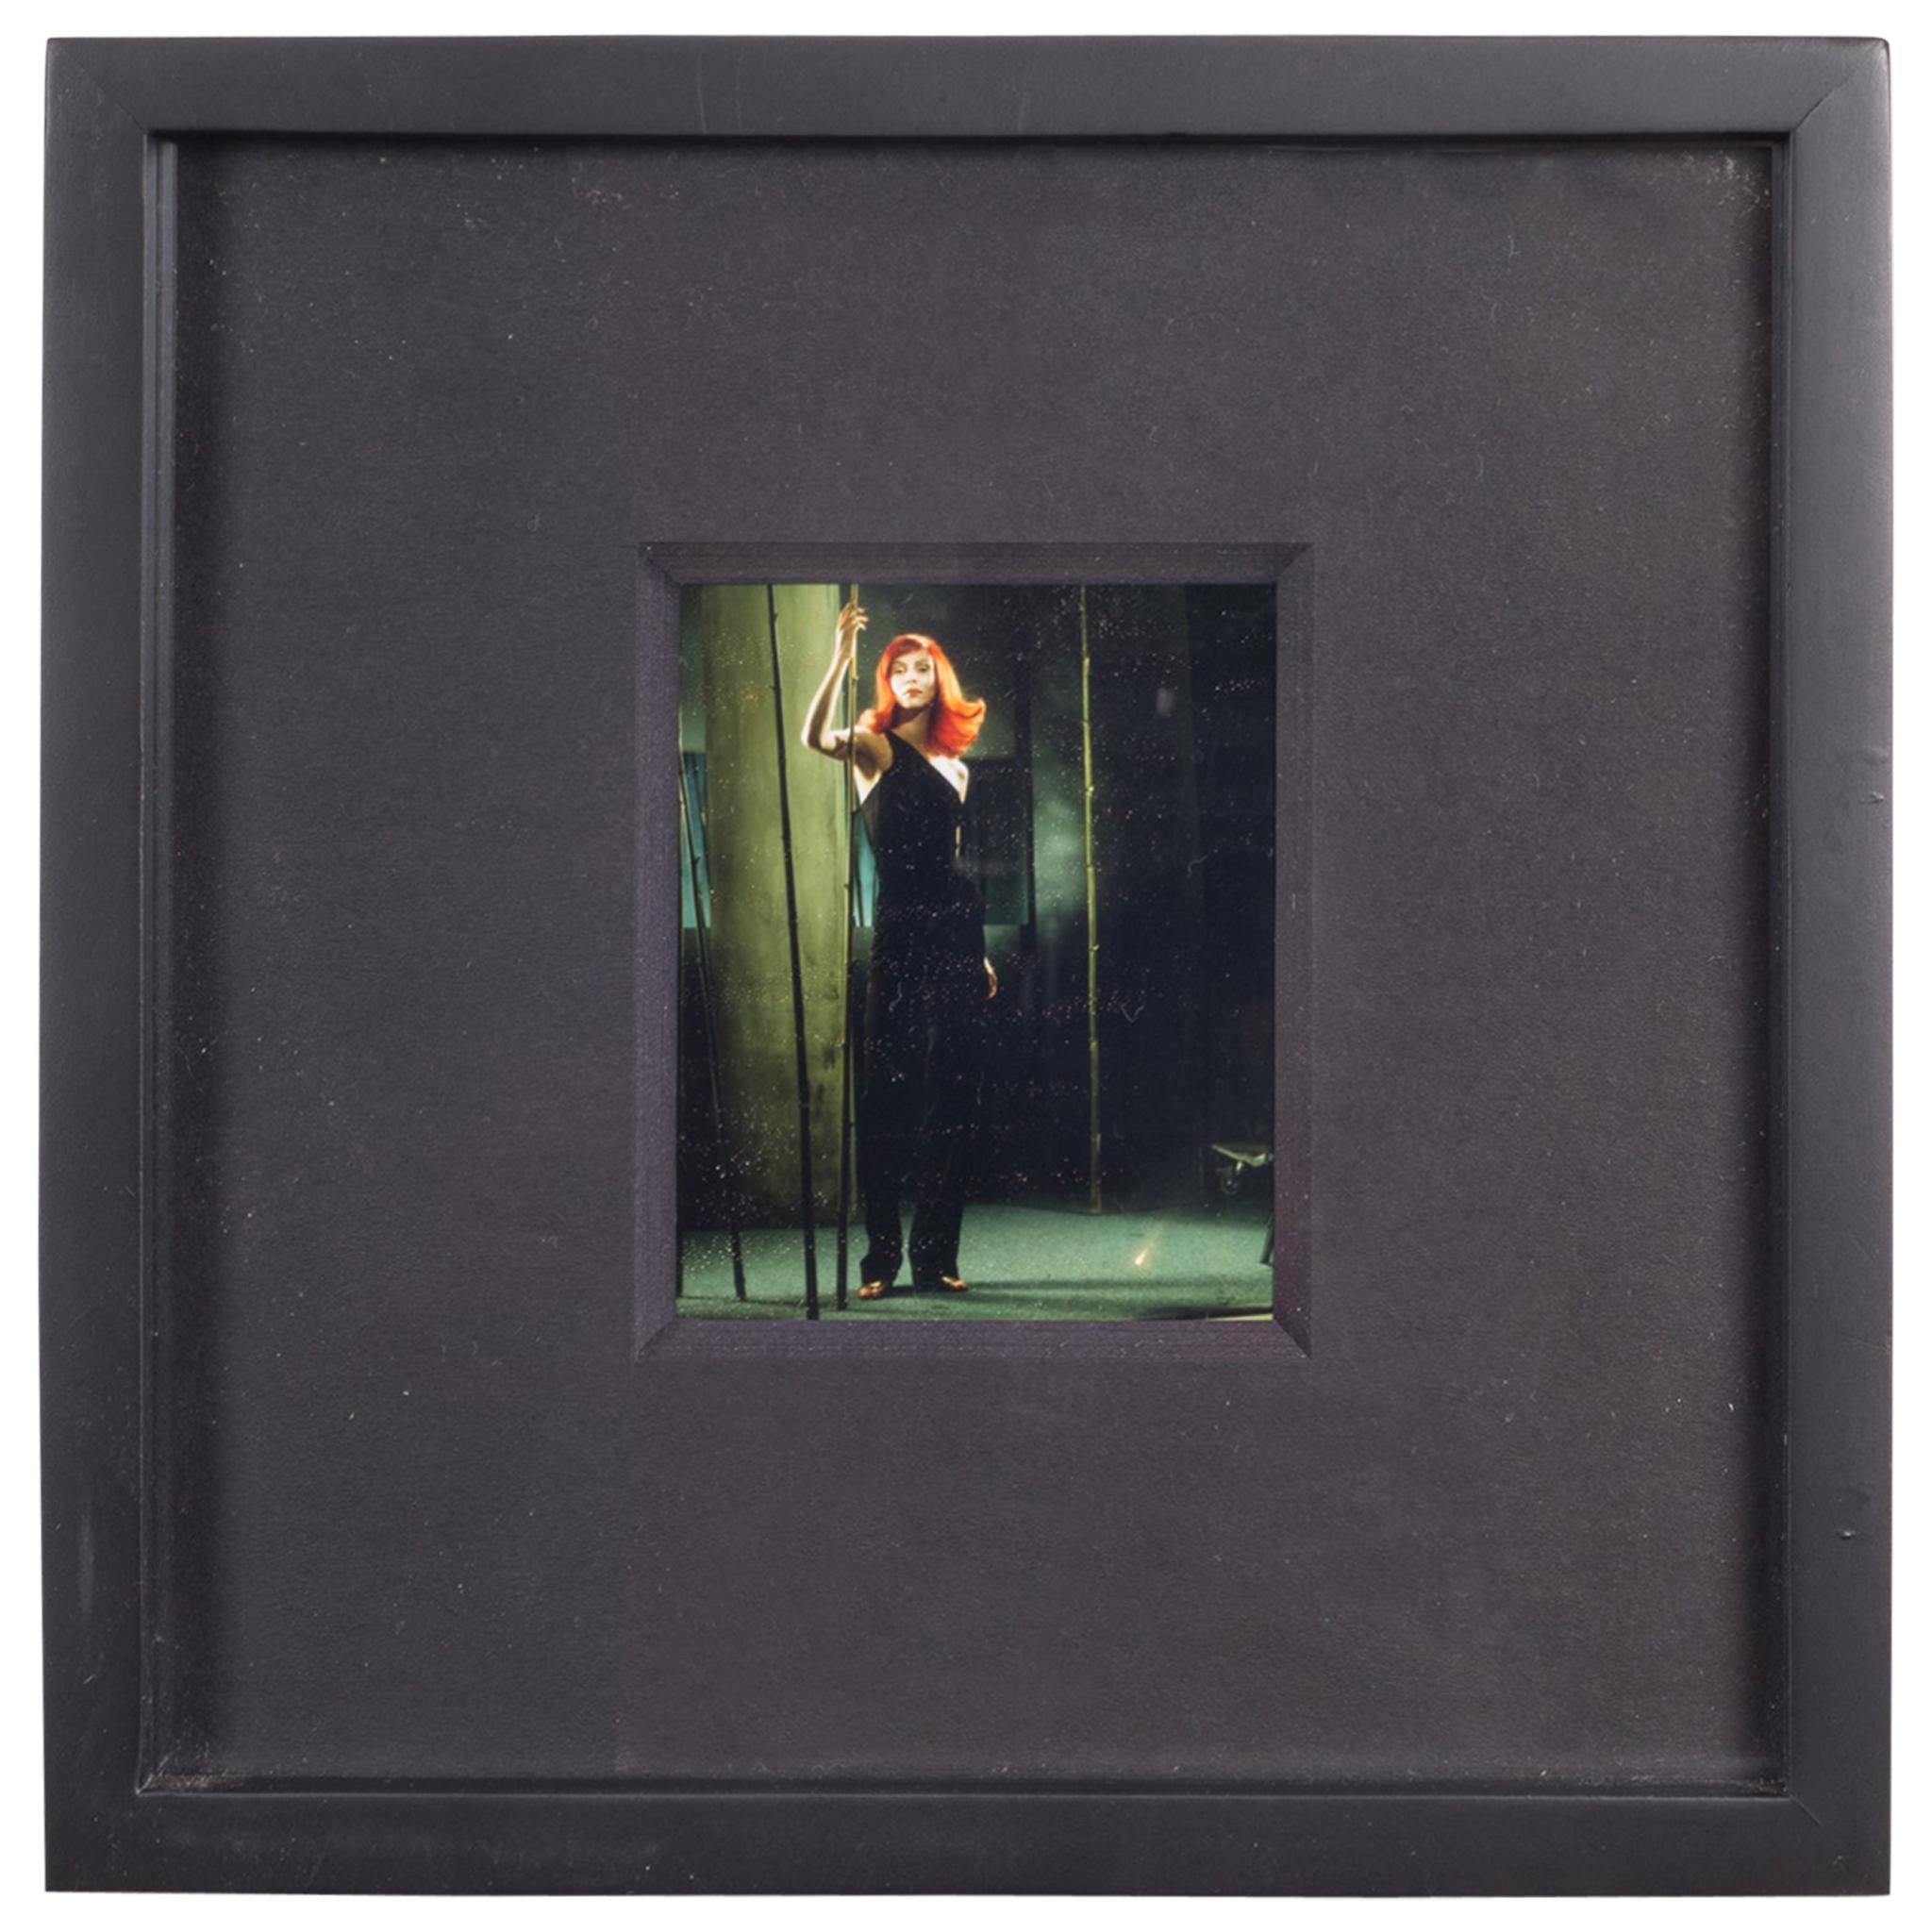 Polaroid- Testbild #39 von Denise Tarantino für Dah Len Studios